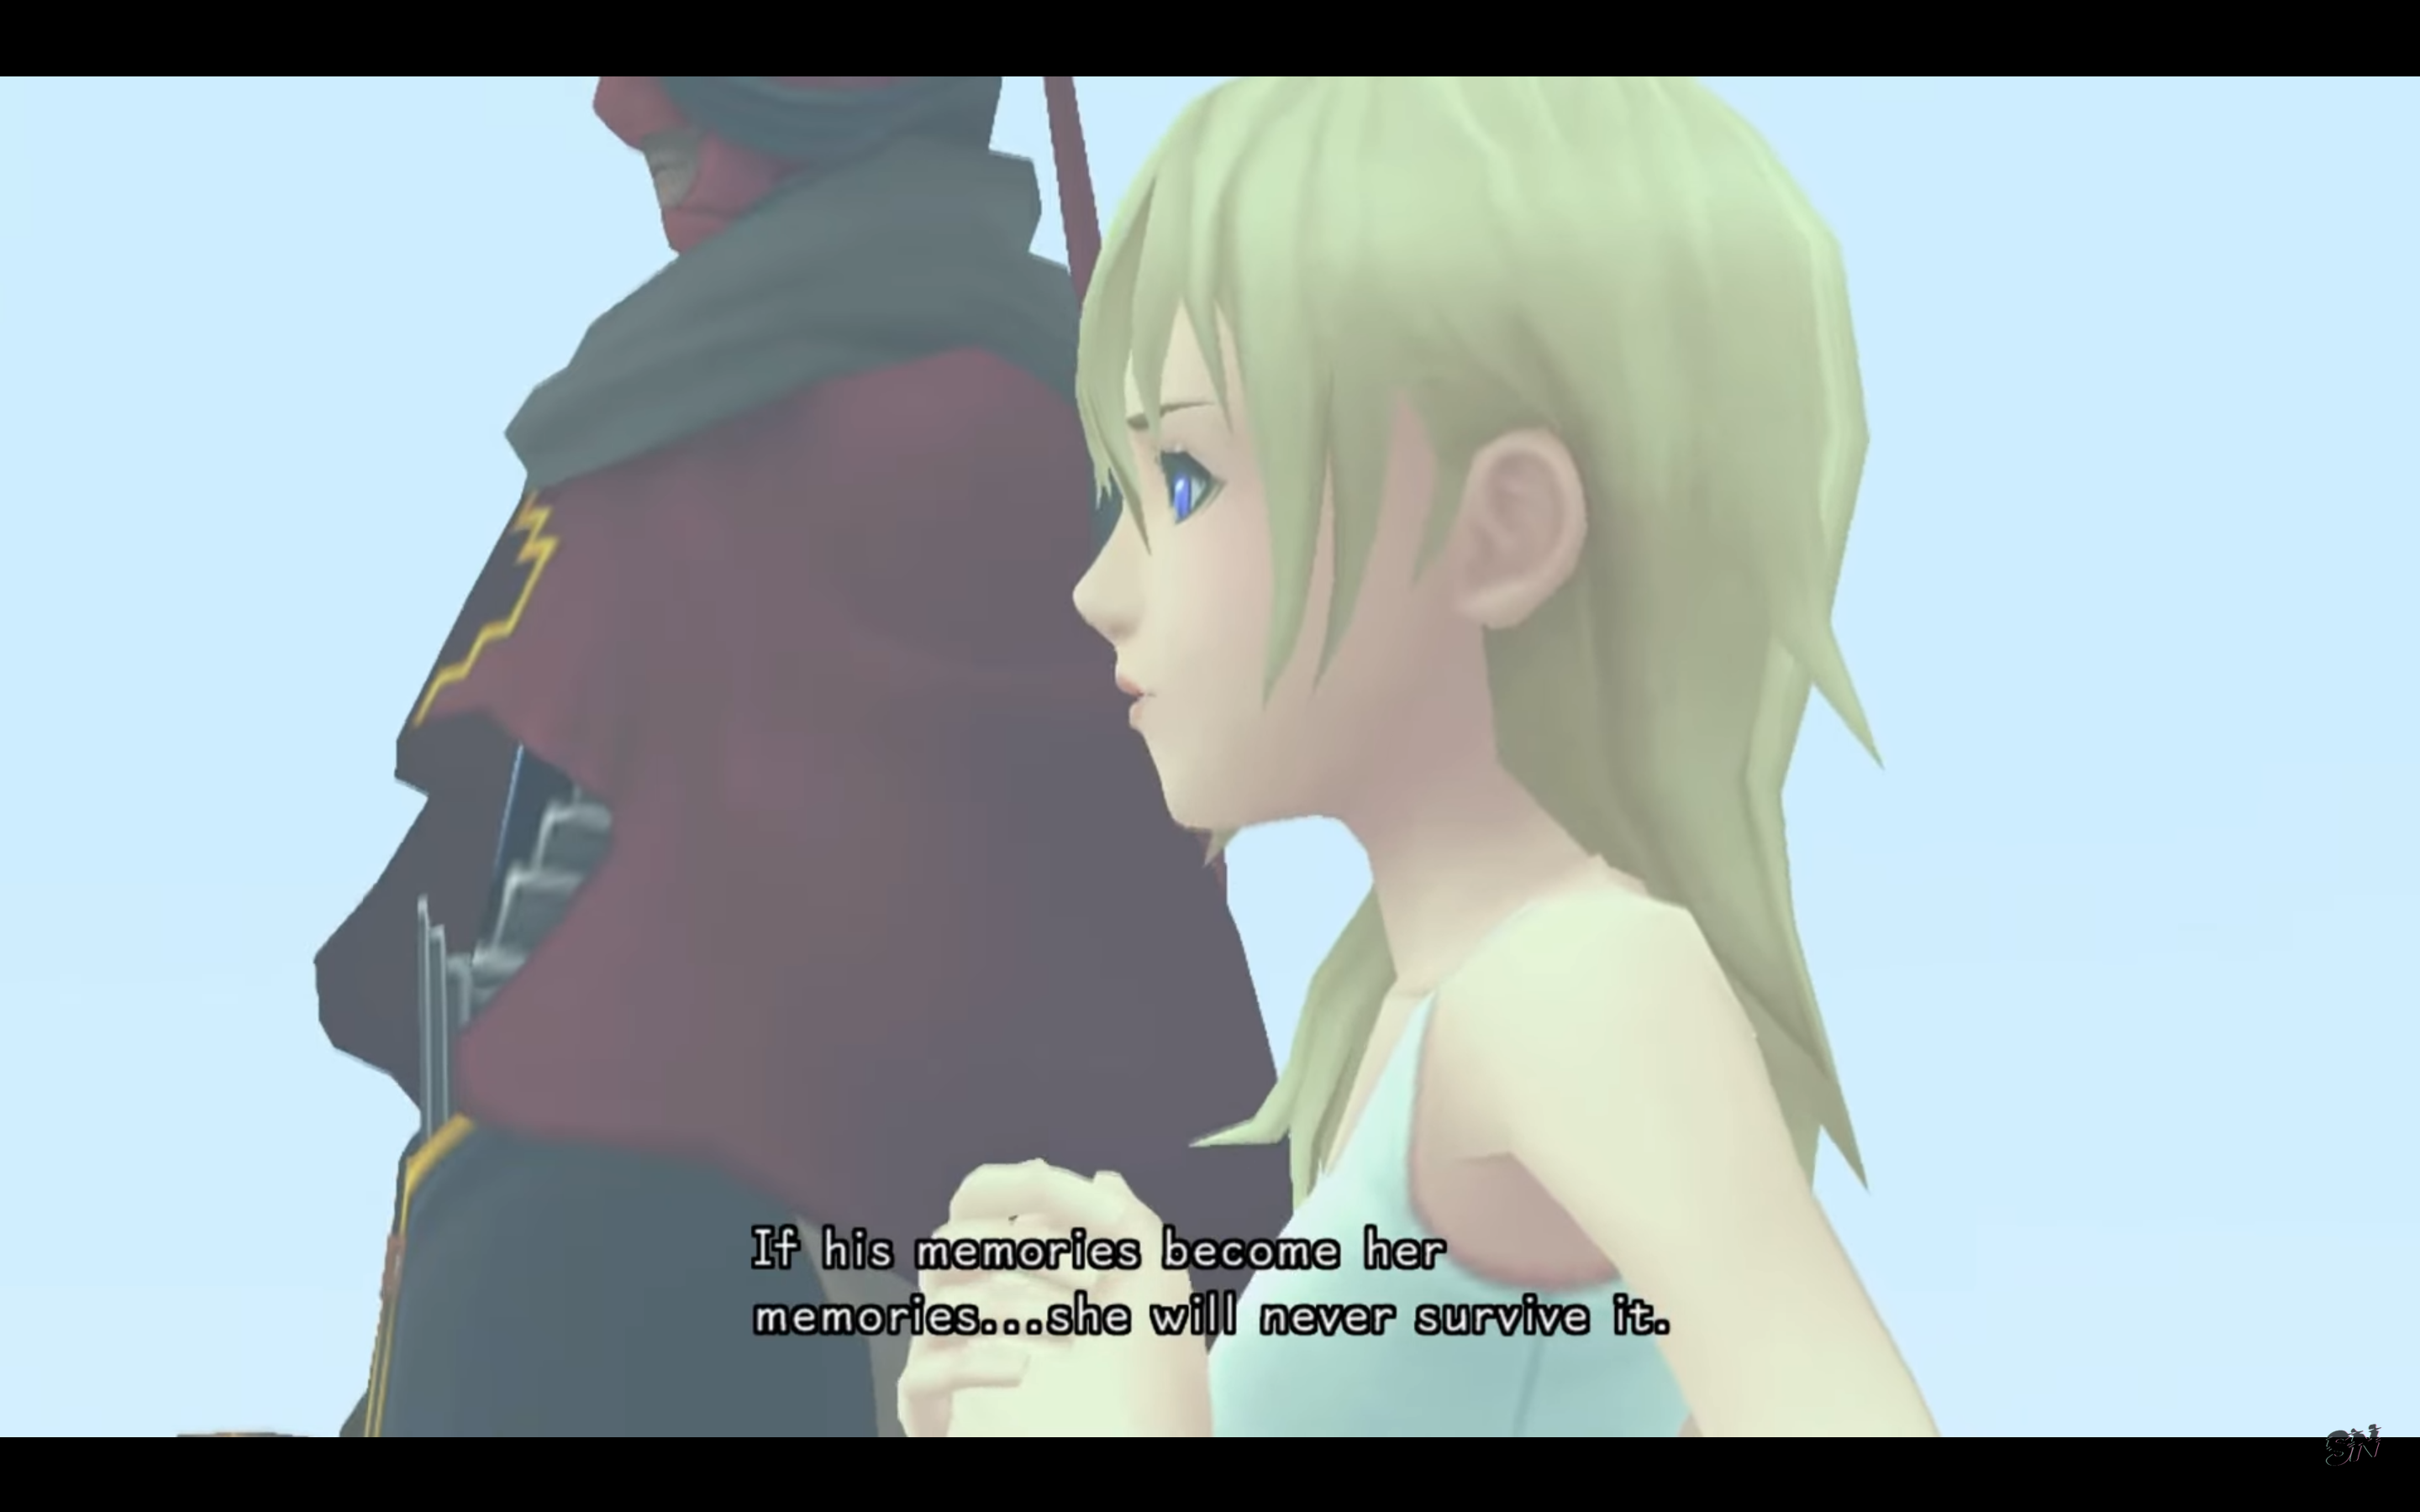 "Kingdom Hearts: 358/2 Days". 2009. Square Enix.
Naminé and DiZ discussing Sora's memories.